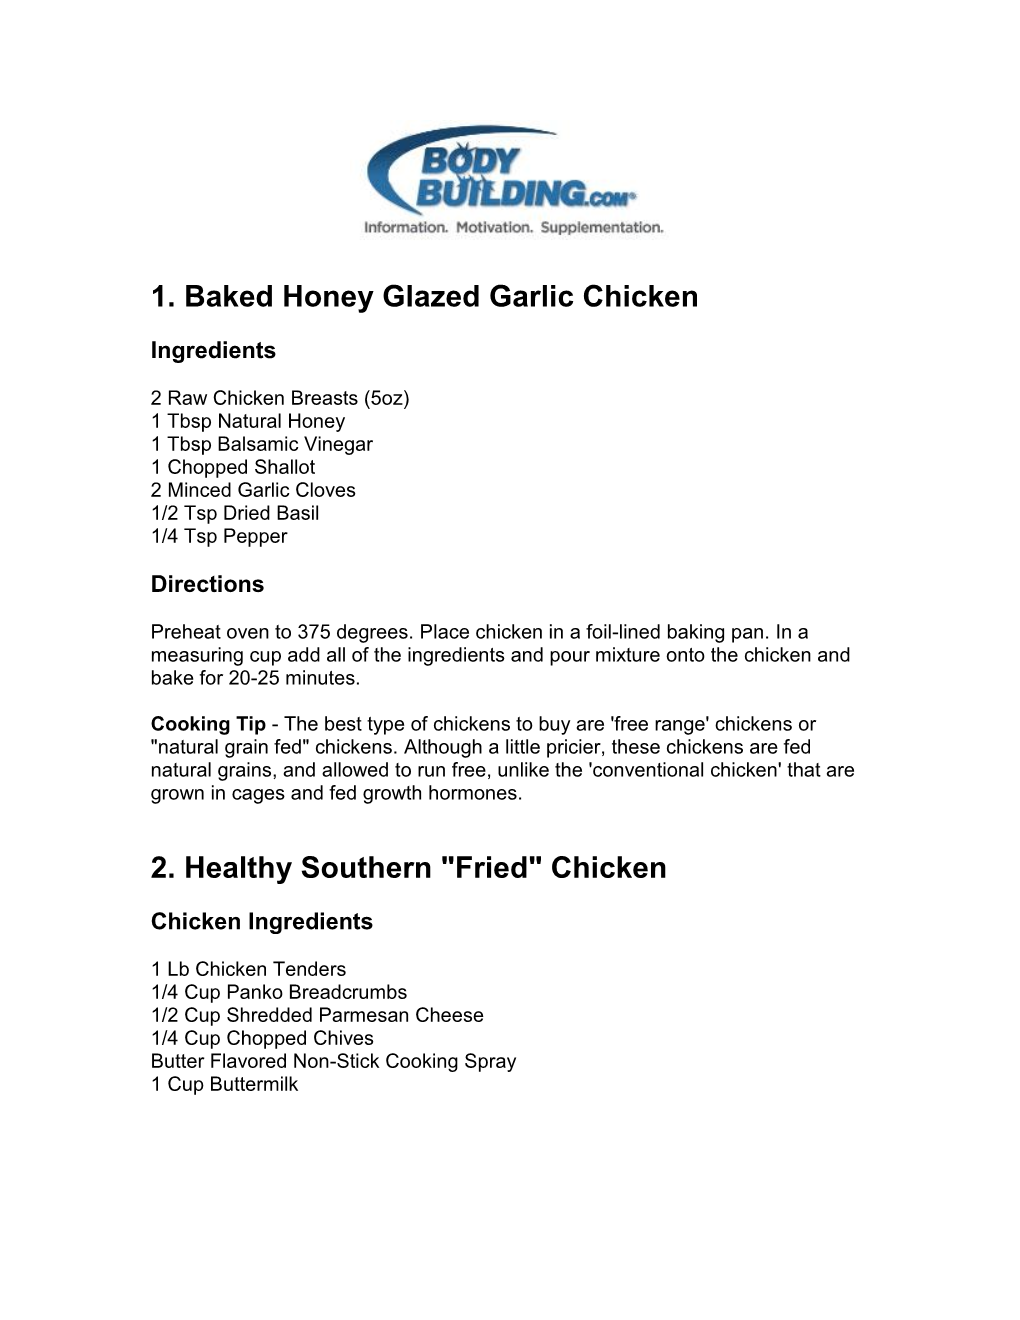 1. Baked Honey Glazed Garlic Chicken 2. Healthy Southern "Fried"